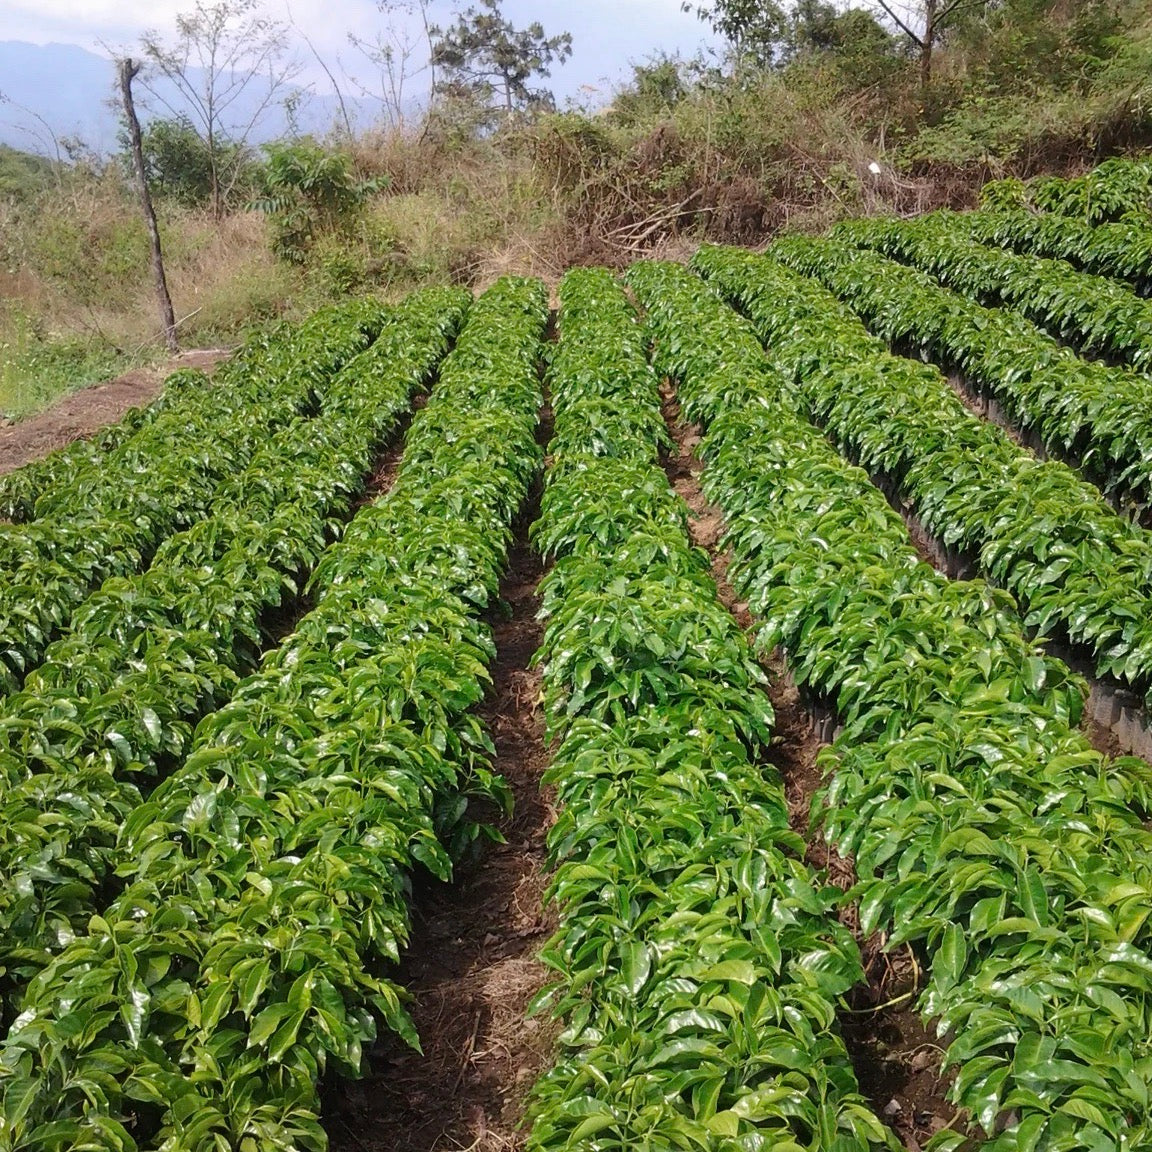 Young coffee plants at La Colina